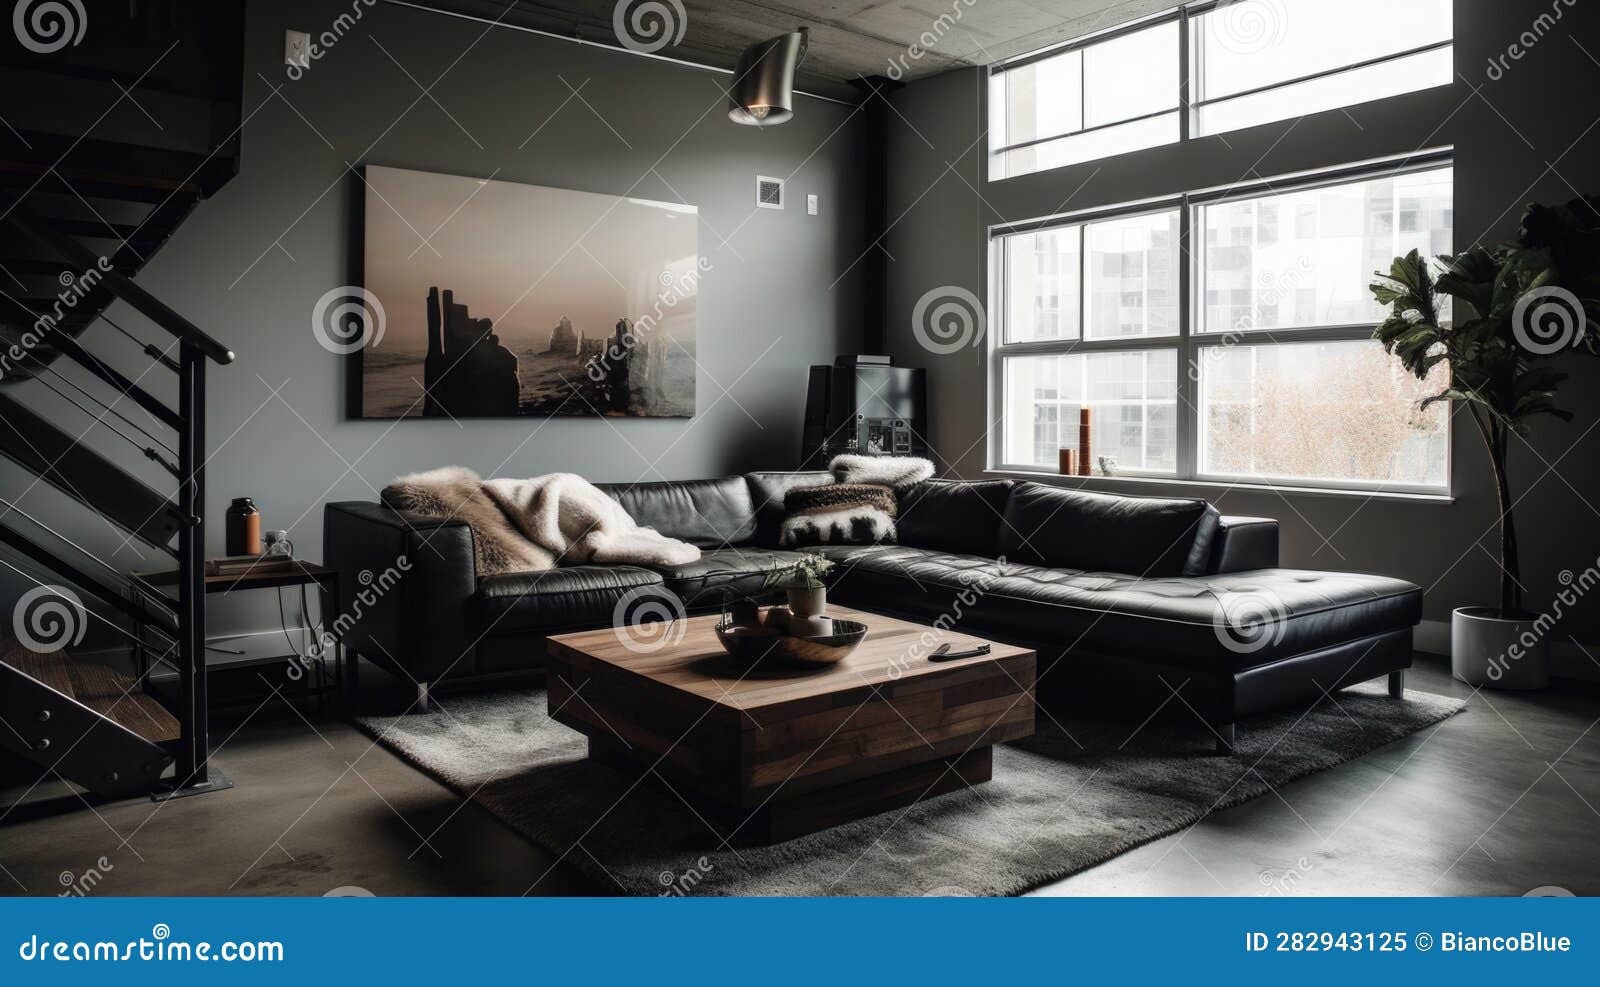 Living Room Decor, Home Interior Design . Modern Industrial Style ...